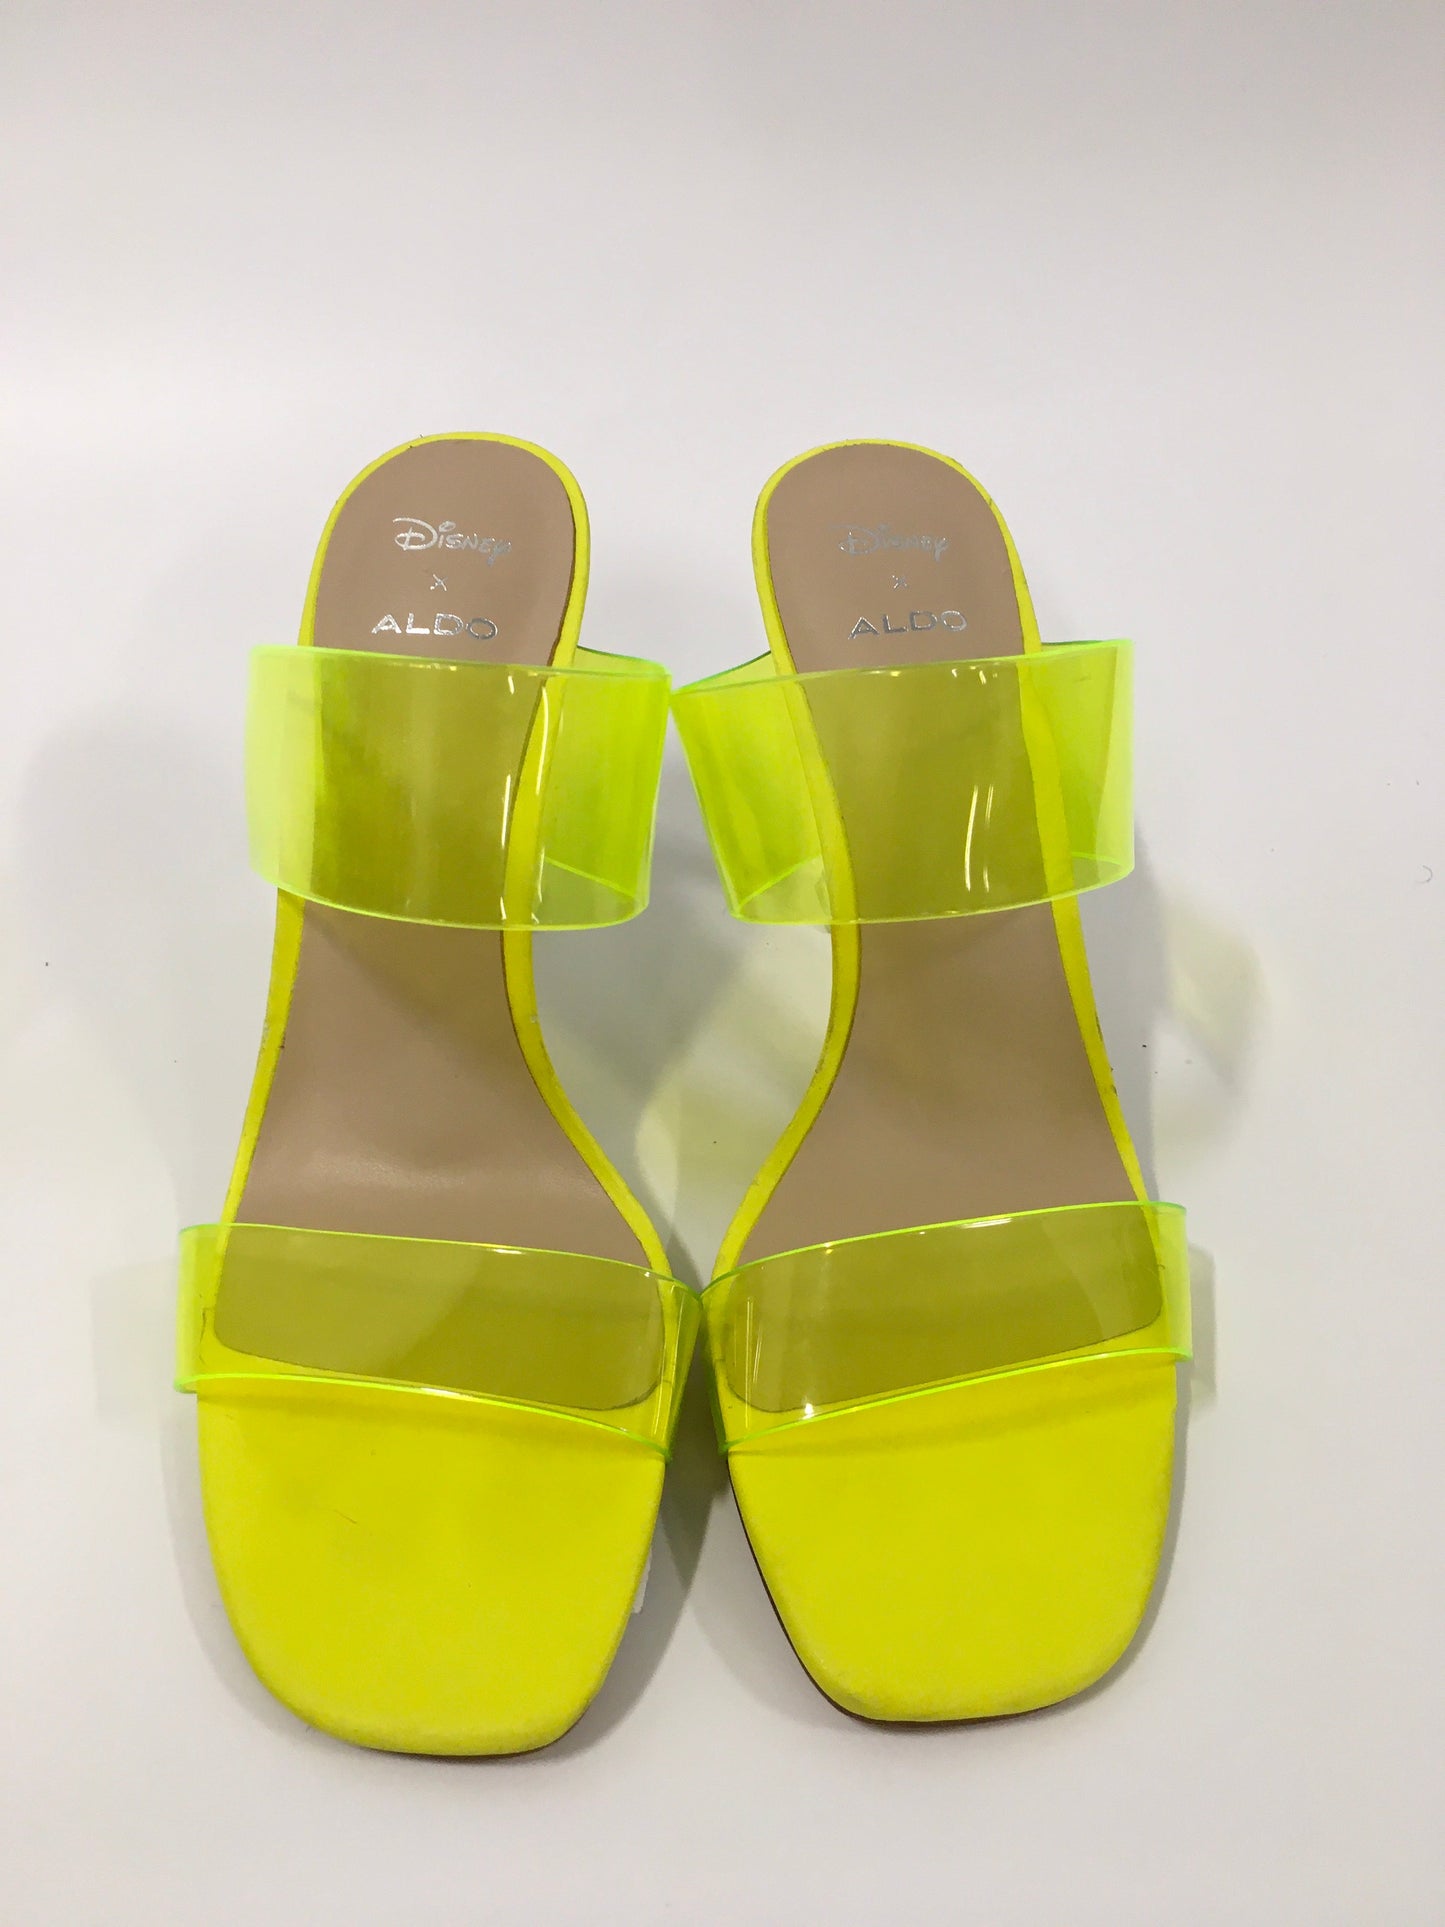 Neon Shoes Heels Stiletto Aldo, Size 7.5